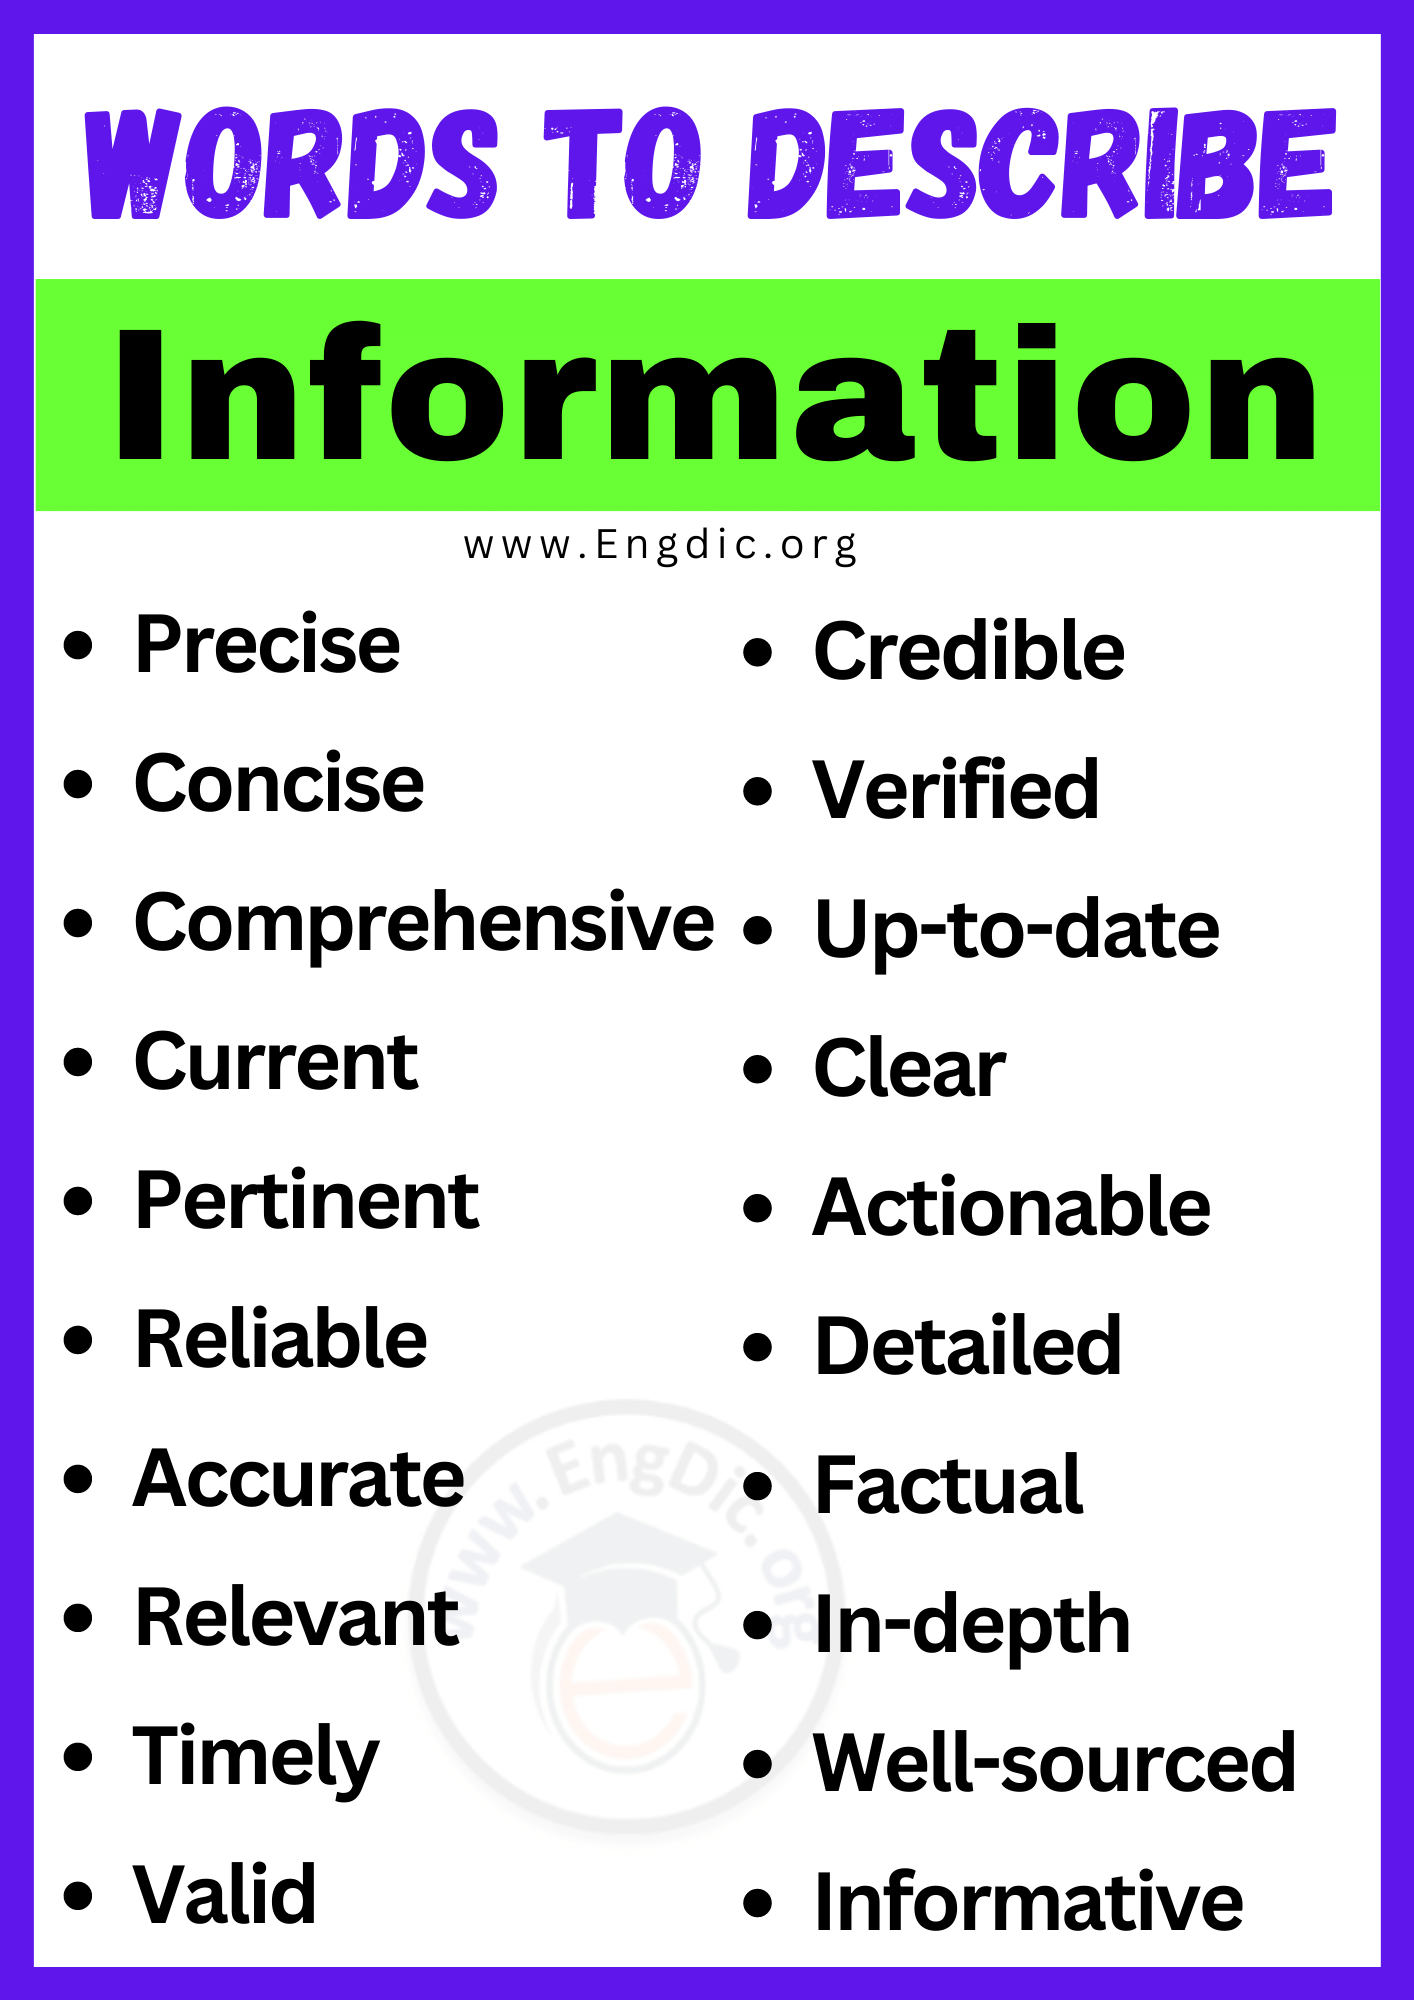 Words to Describe Information